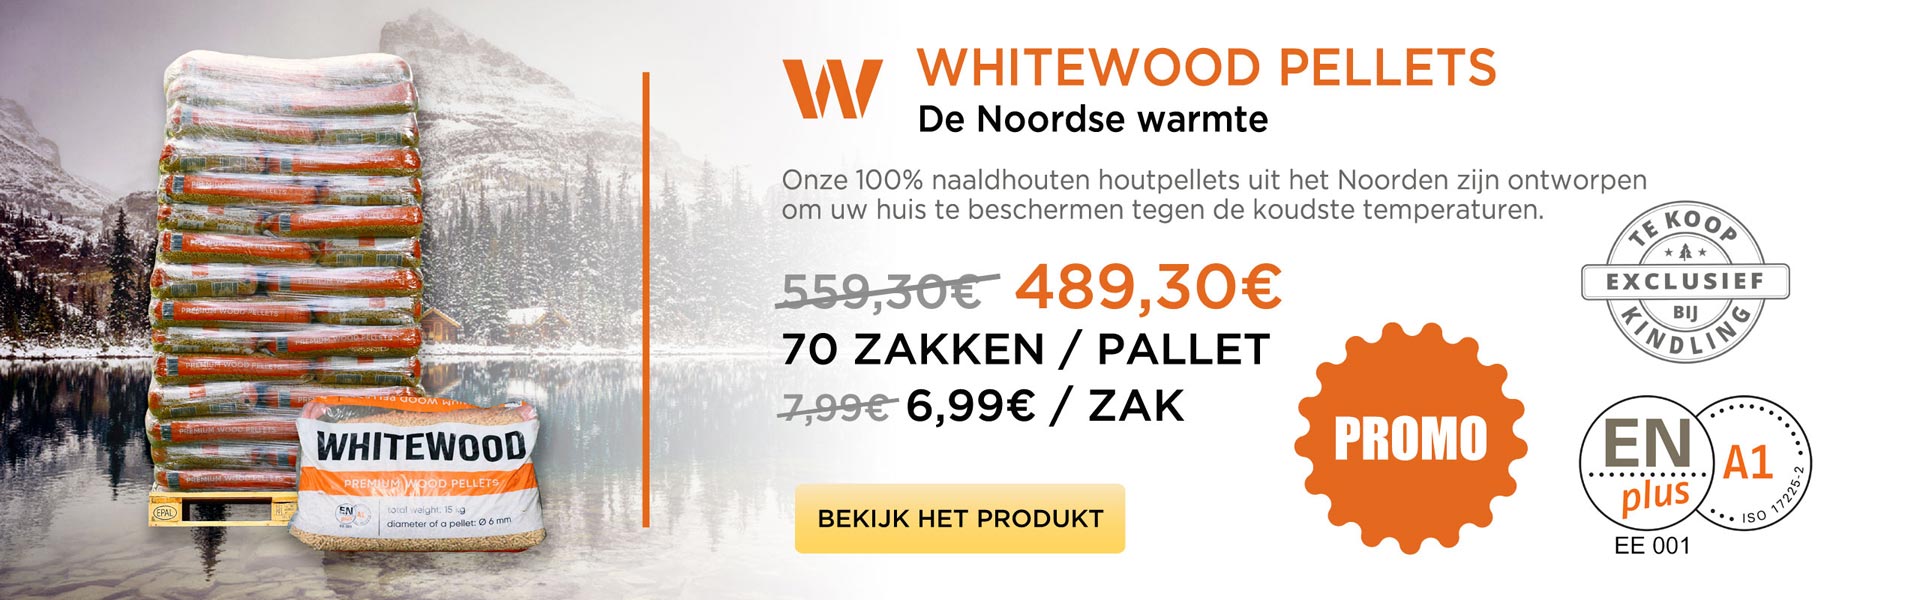 whitewood-pellets-promo-nl